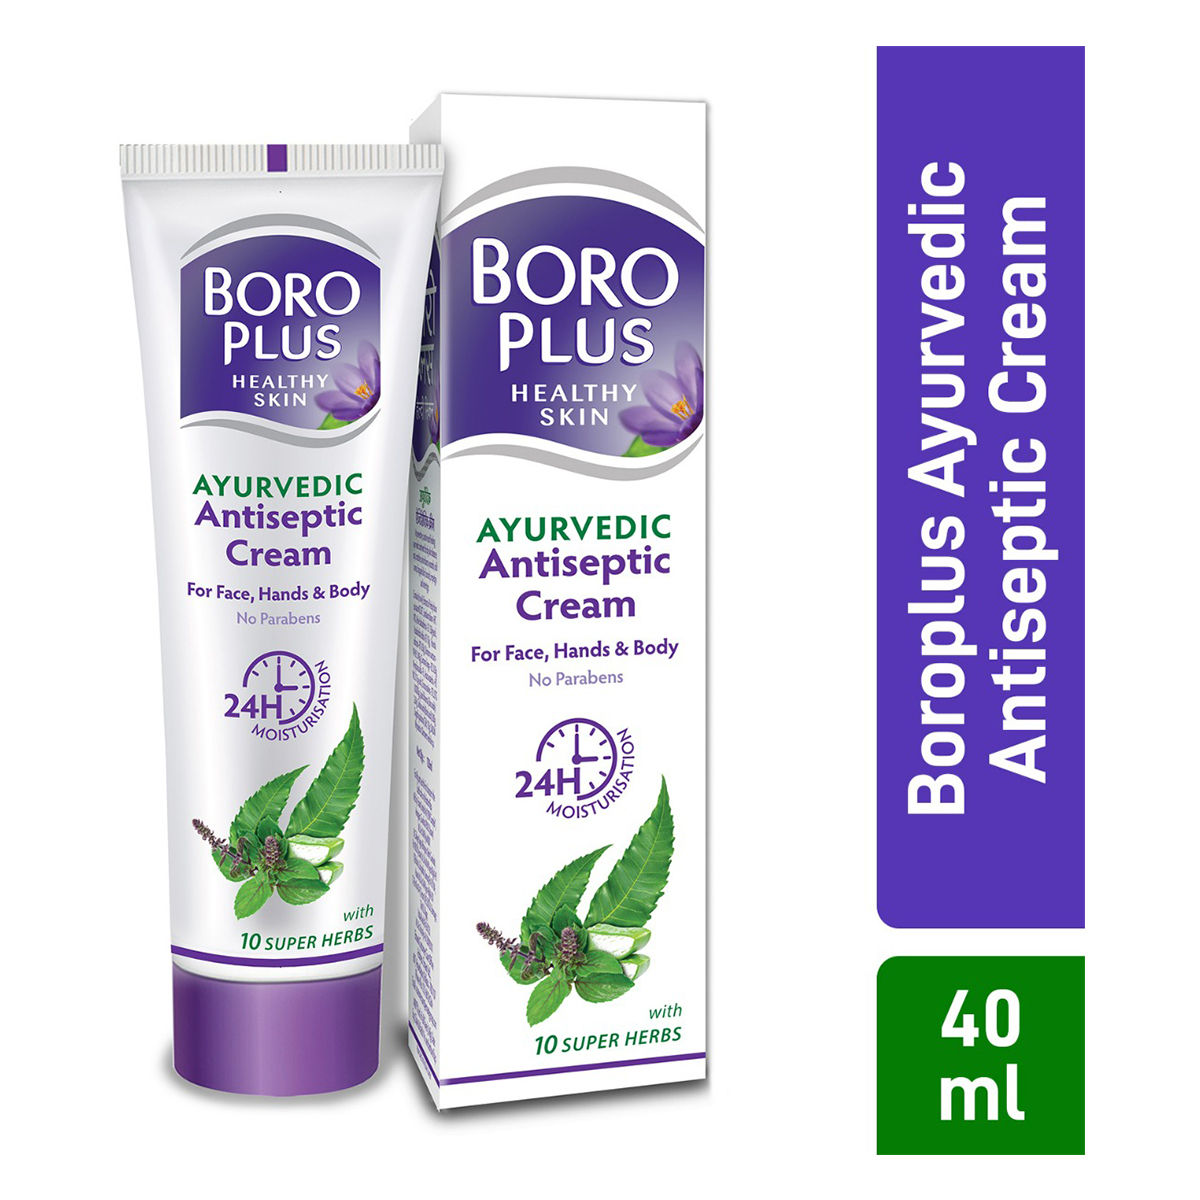 Buy Boroplus Ayurvedic Antiseptic Cream, 40 ml Online